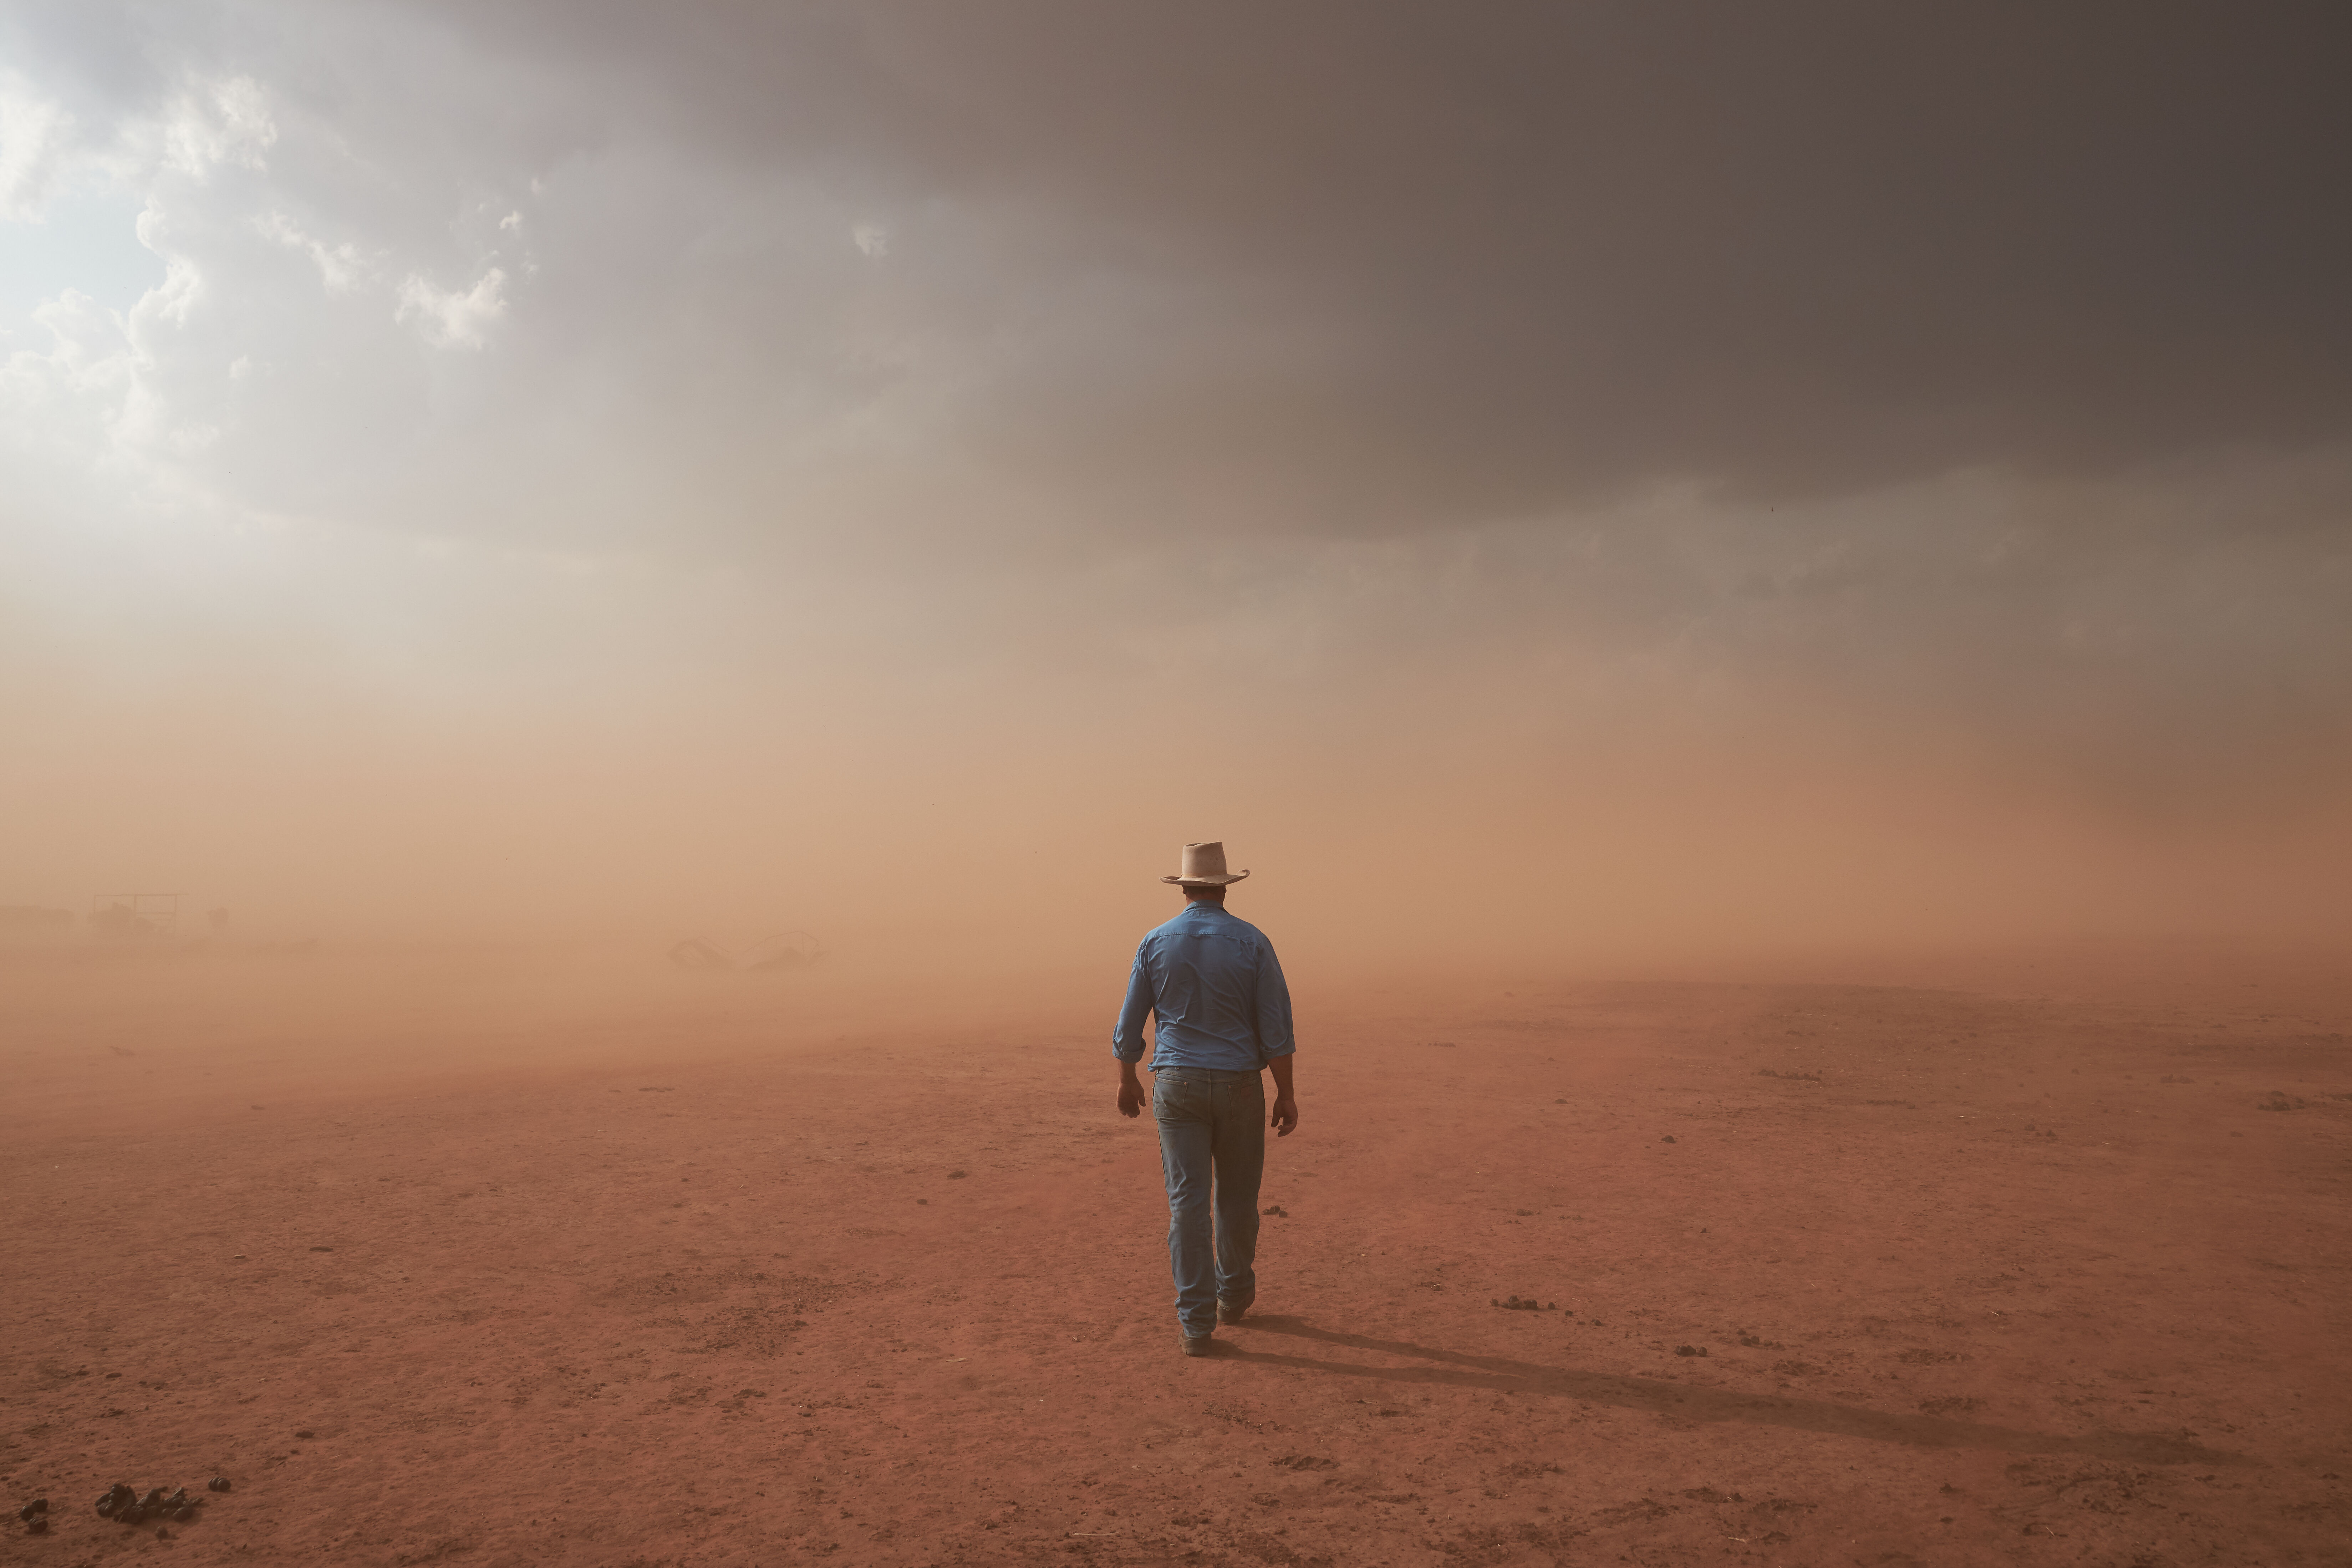 A farmer walking into a barren landscape during drought